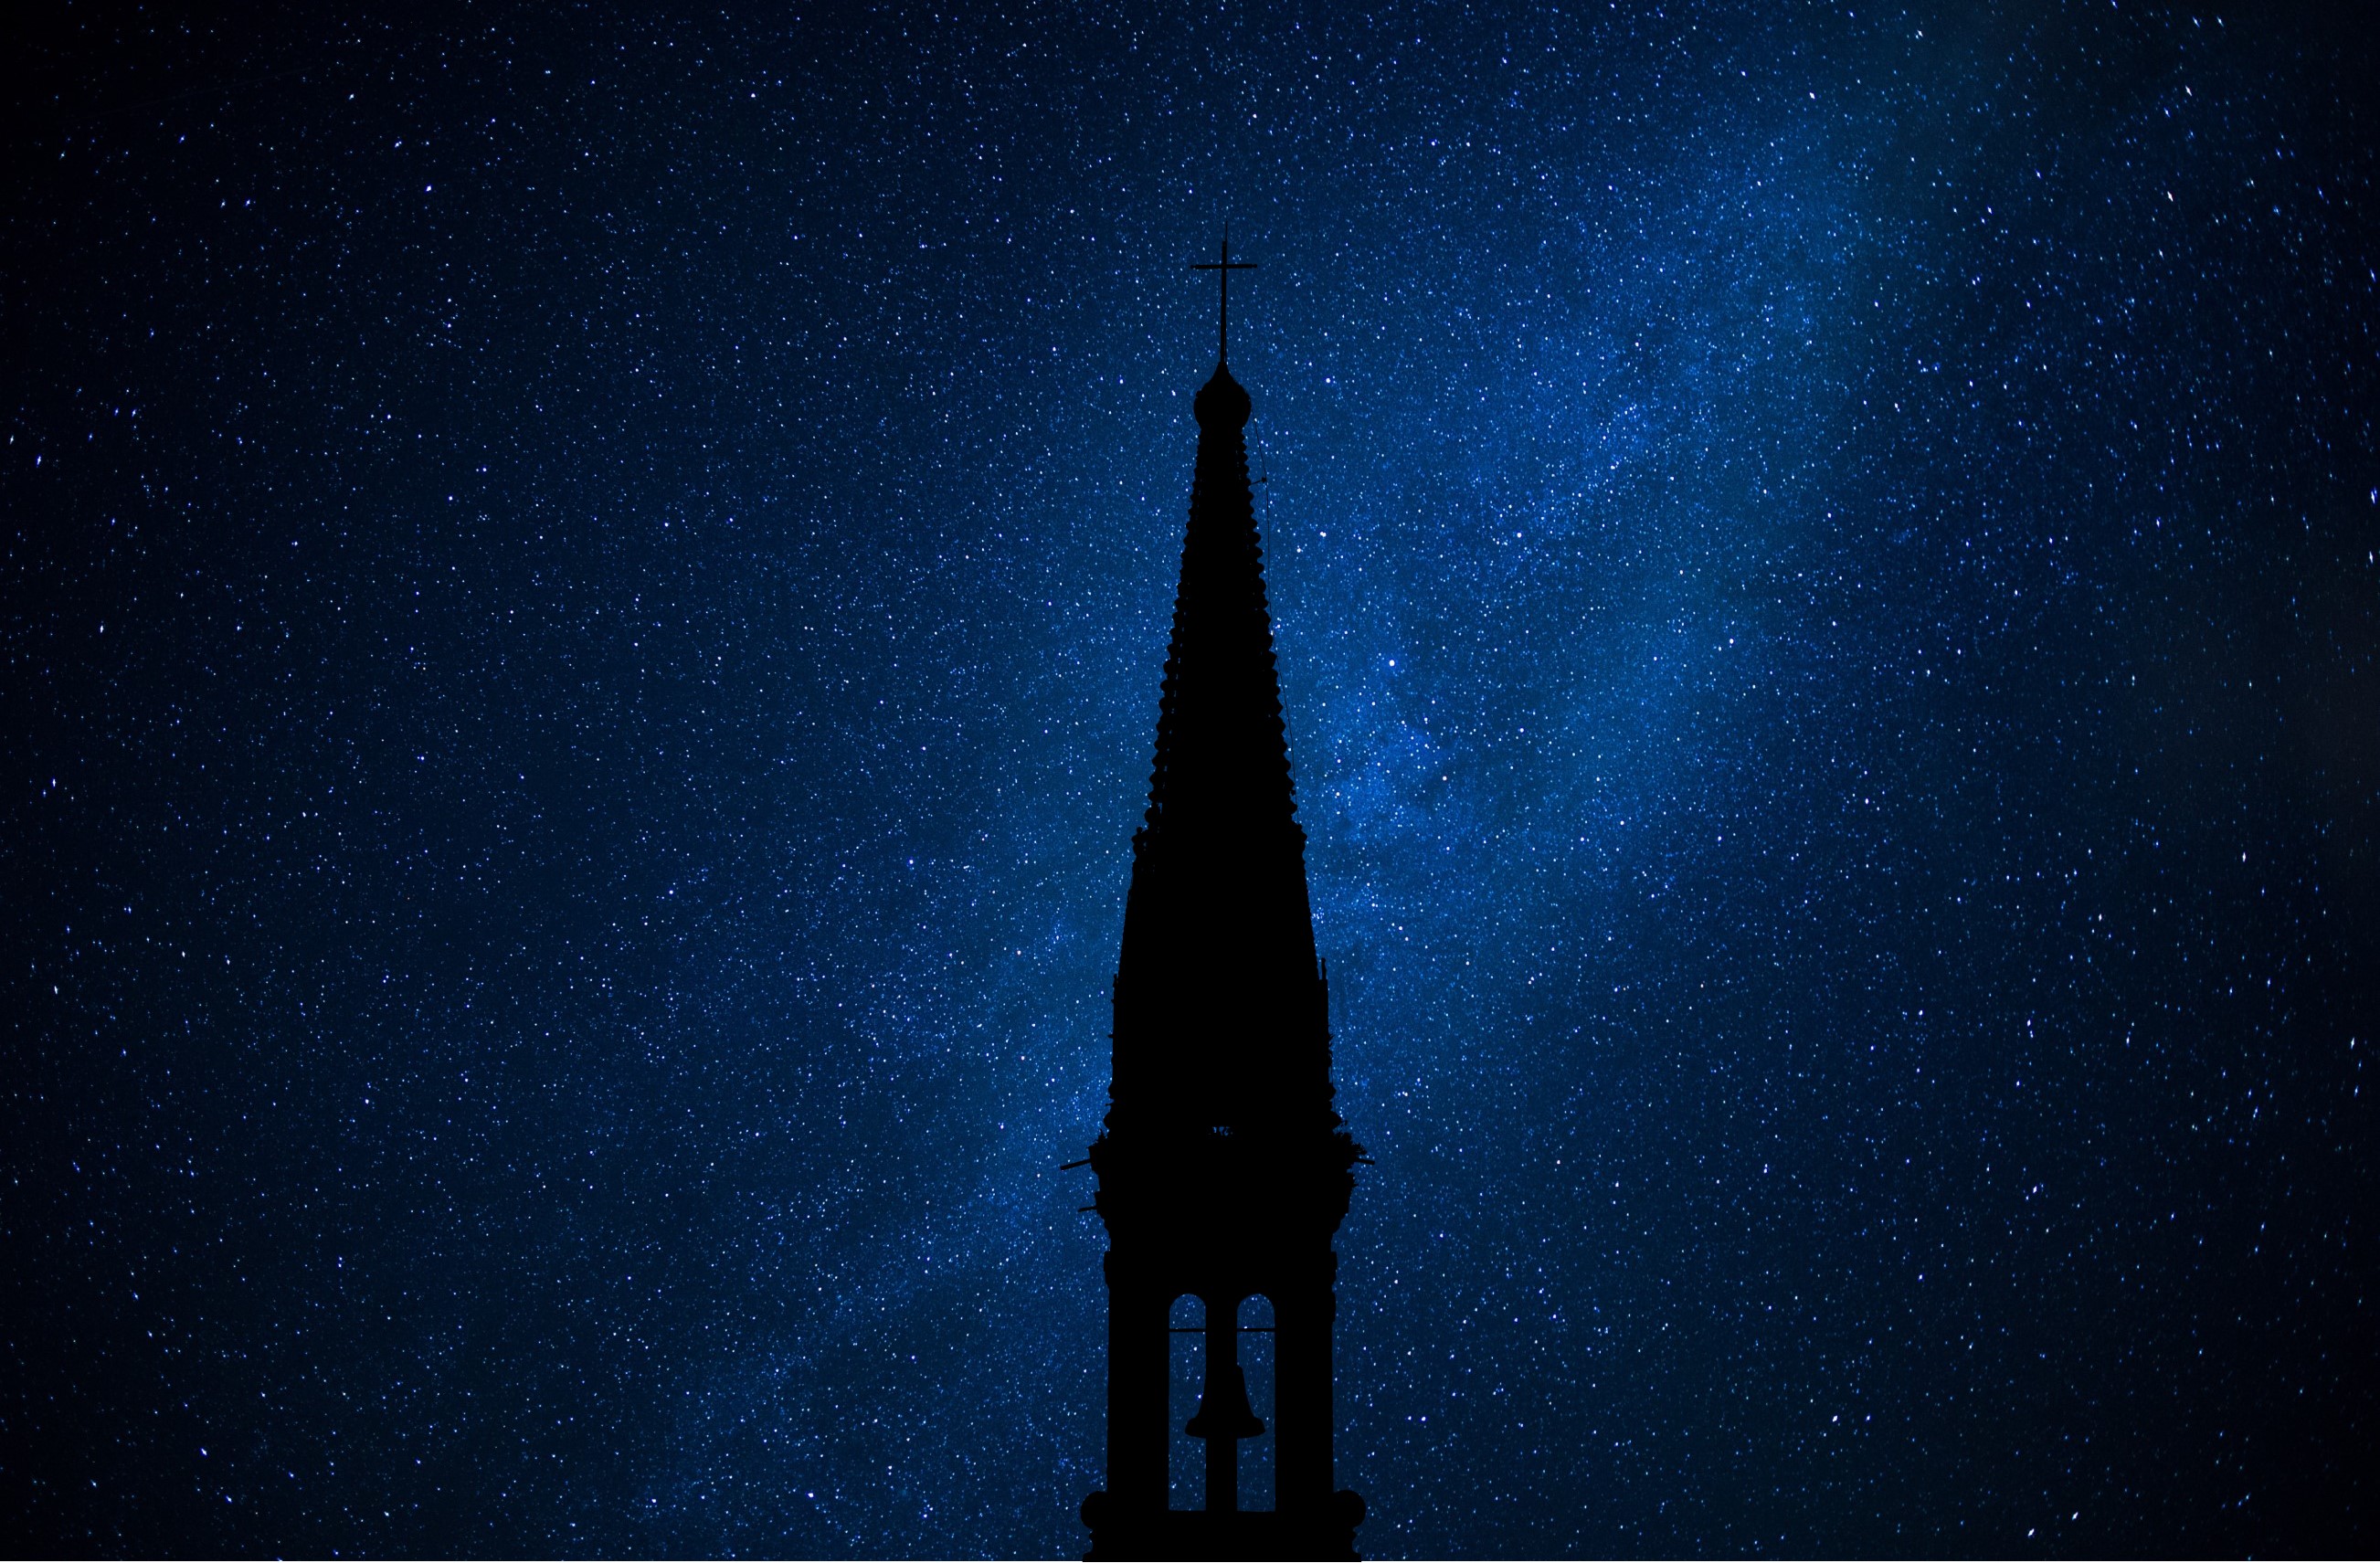 night sky blueish, silhouette of church steeple with cross